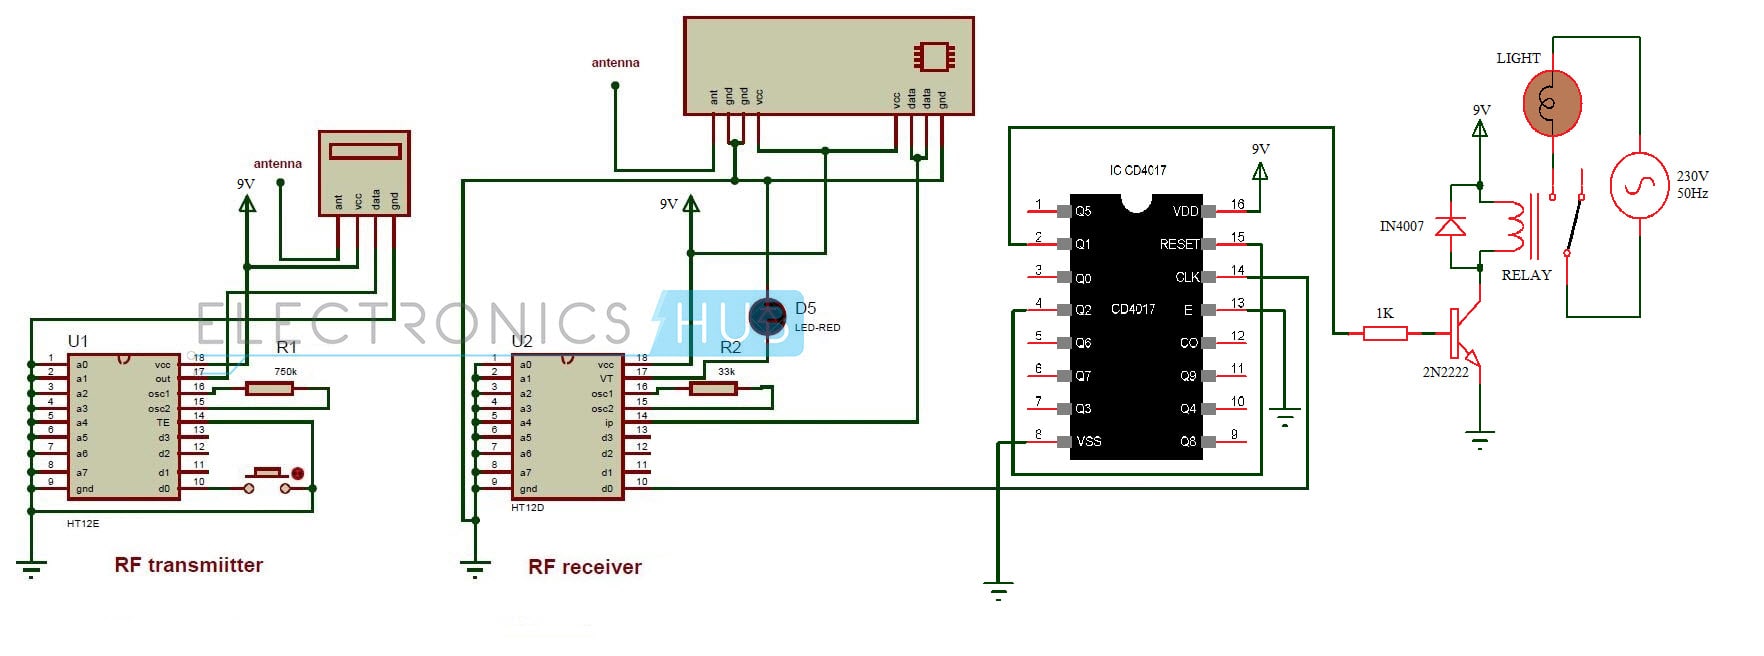 RF Remote Control Circuit for Home Appliances Circuit Diagram